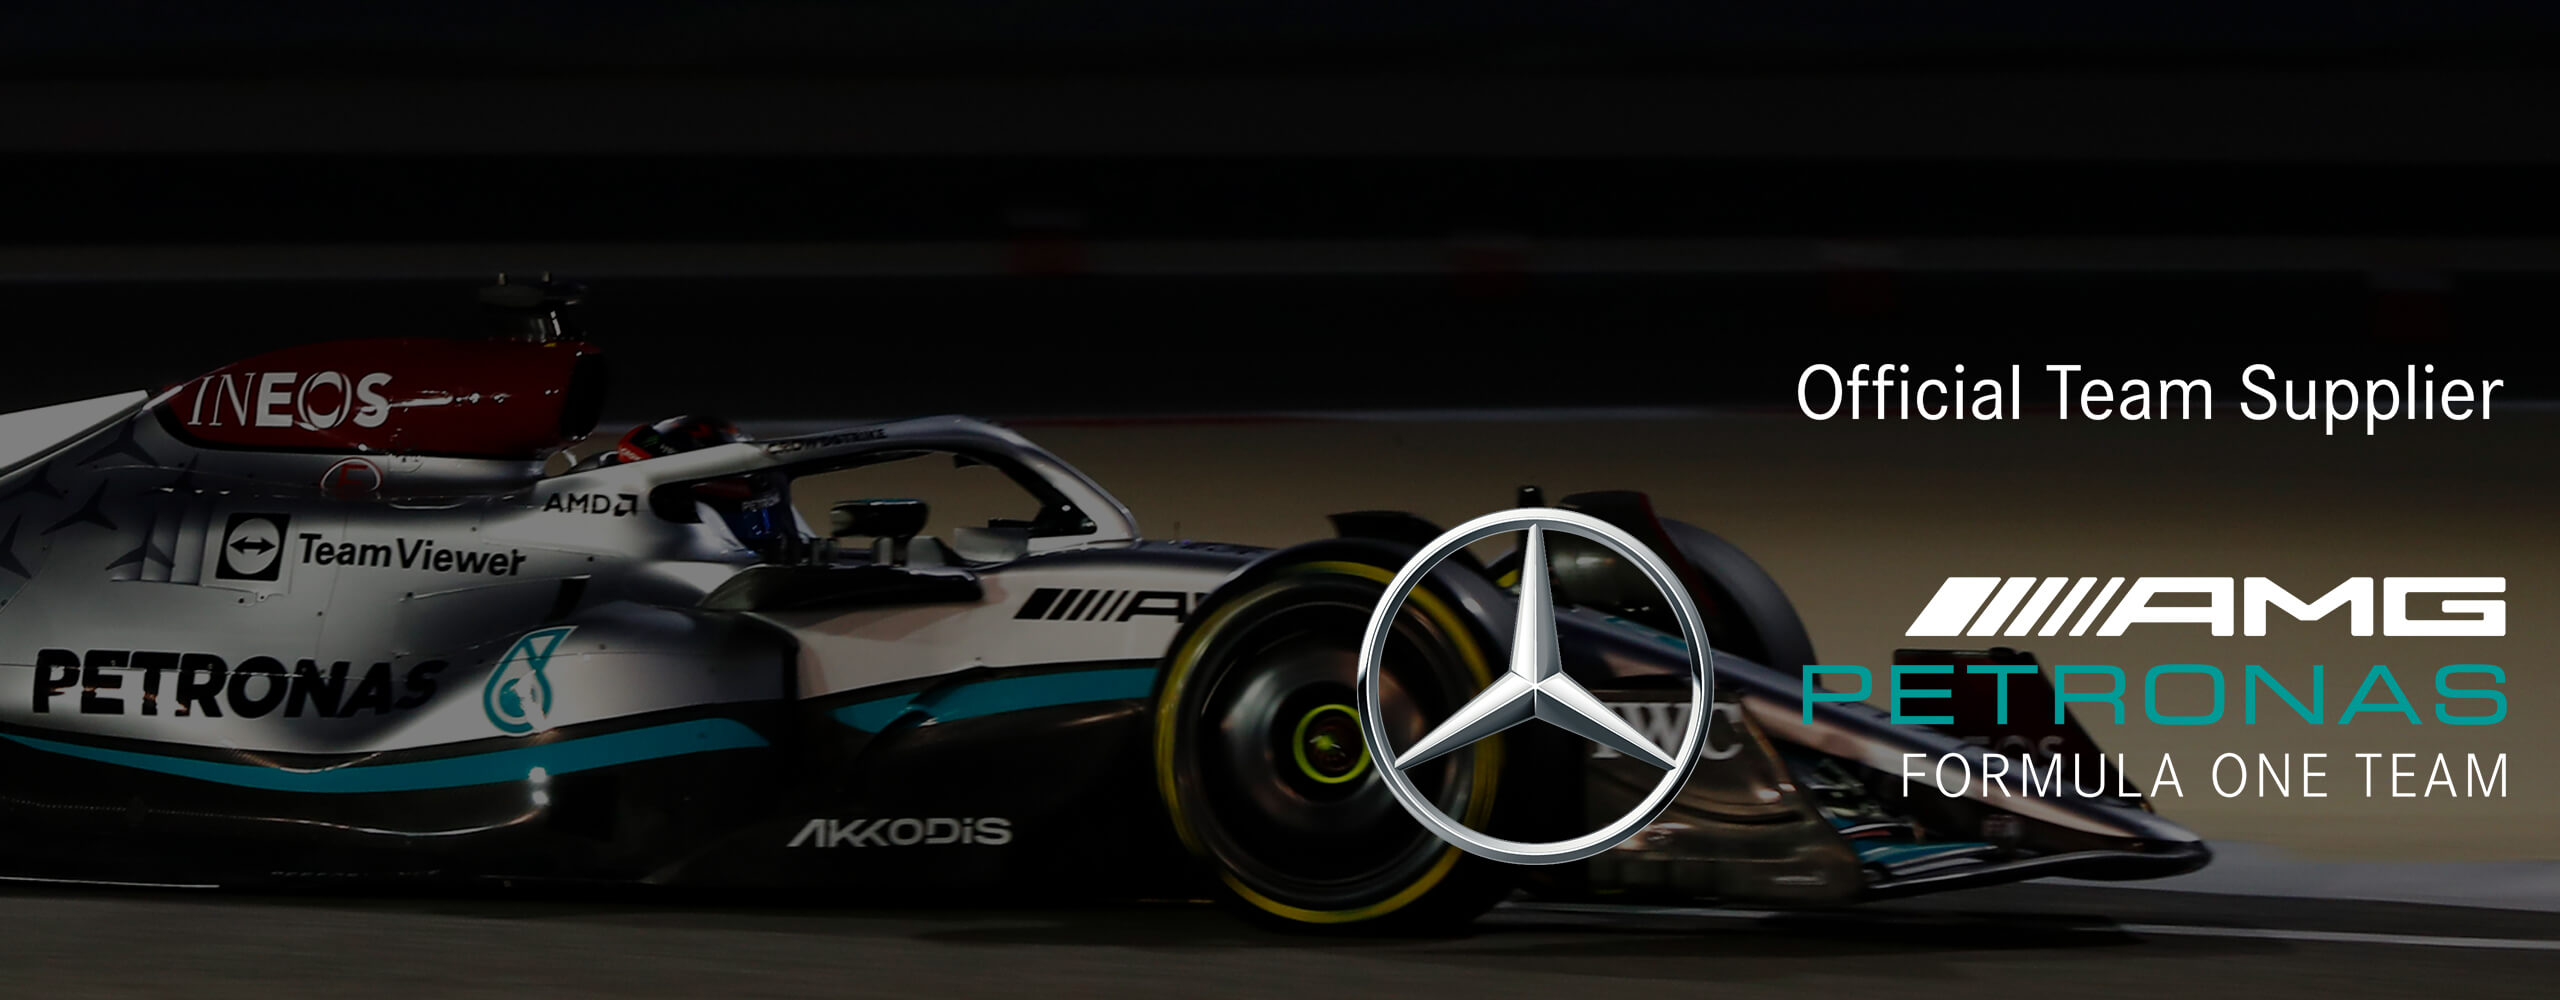 Mercedes_Homepage_Banner-1000